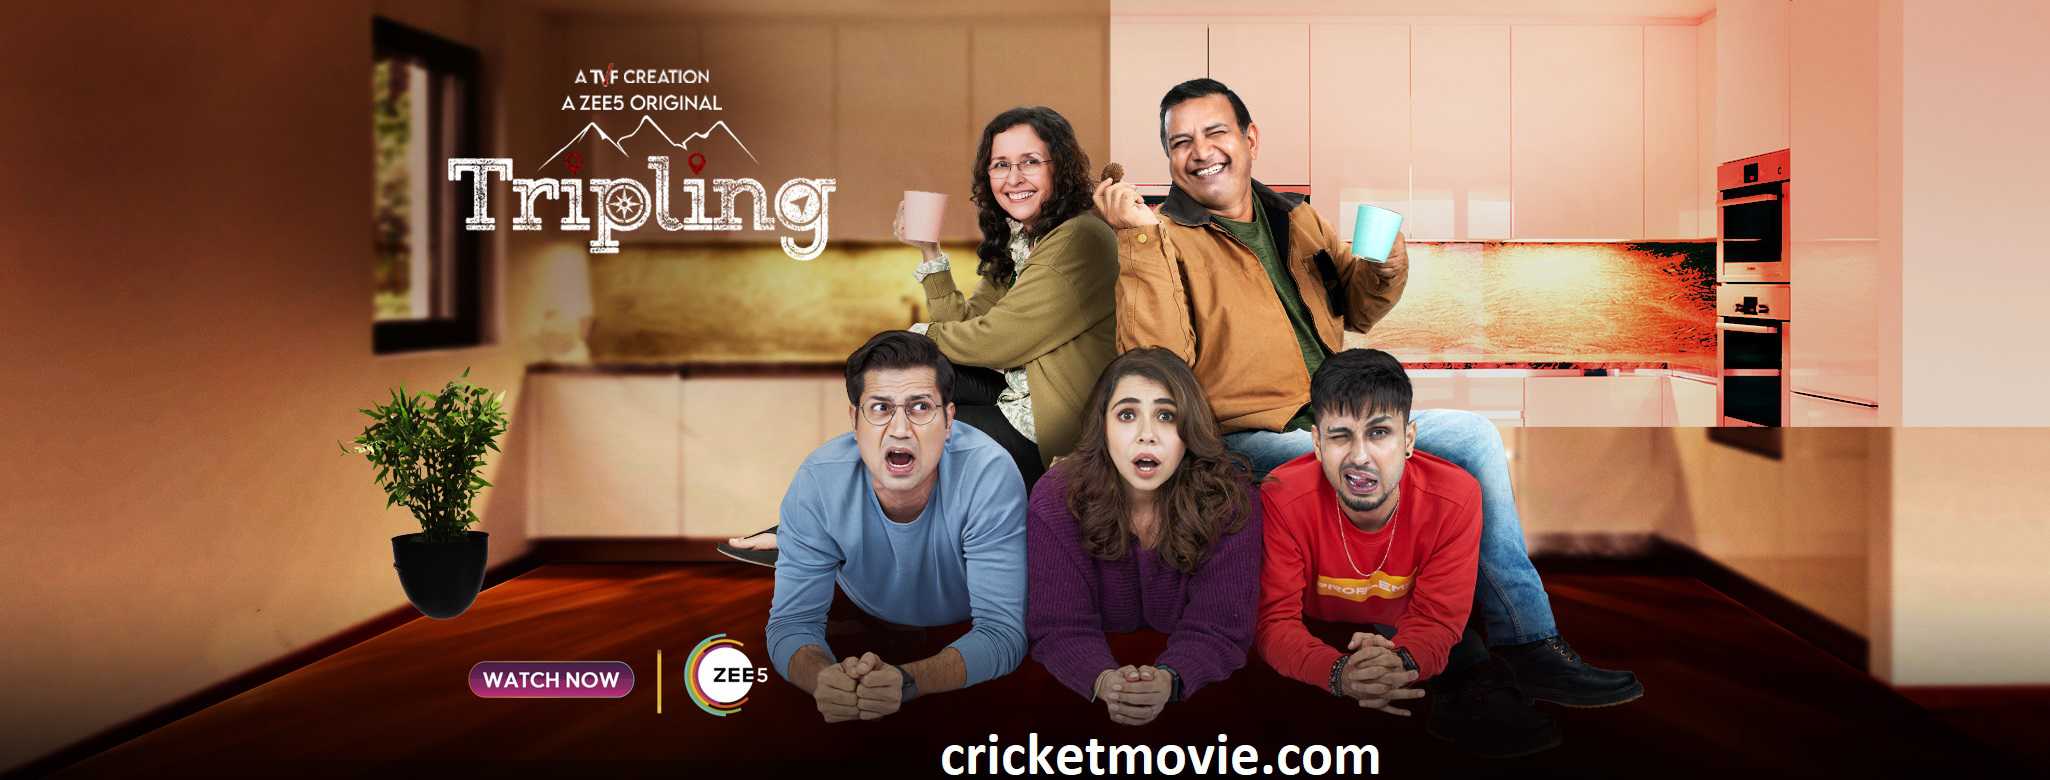 Tripling Season 3 Review-cricketmovie.com